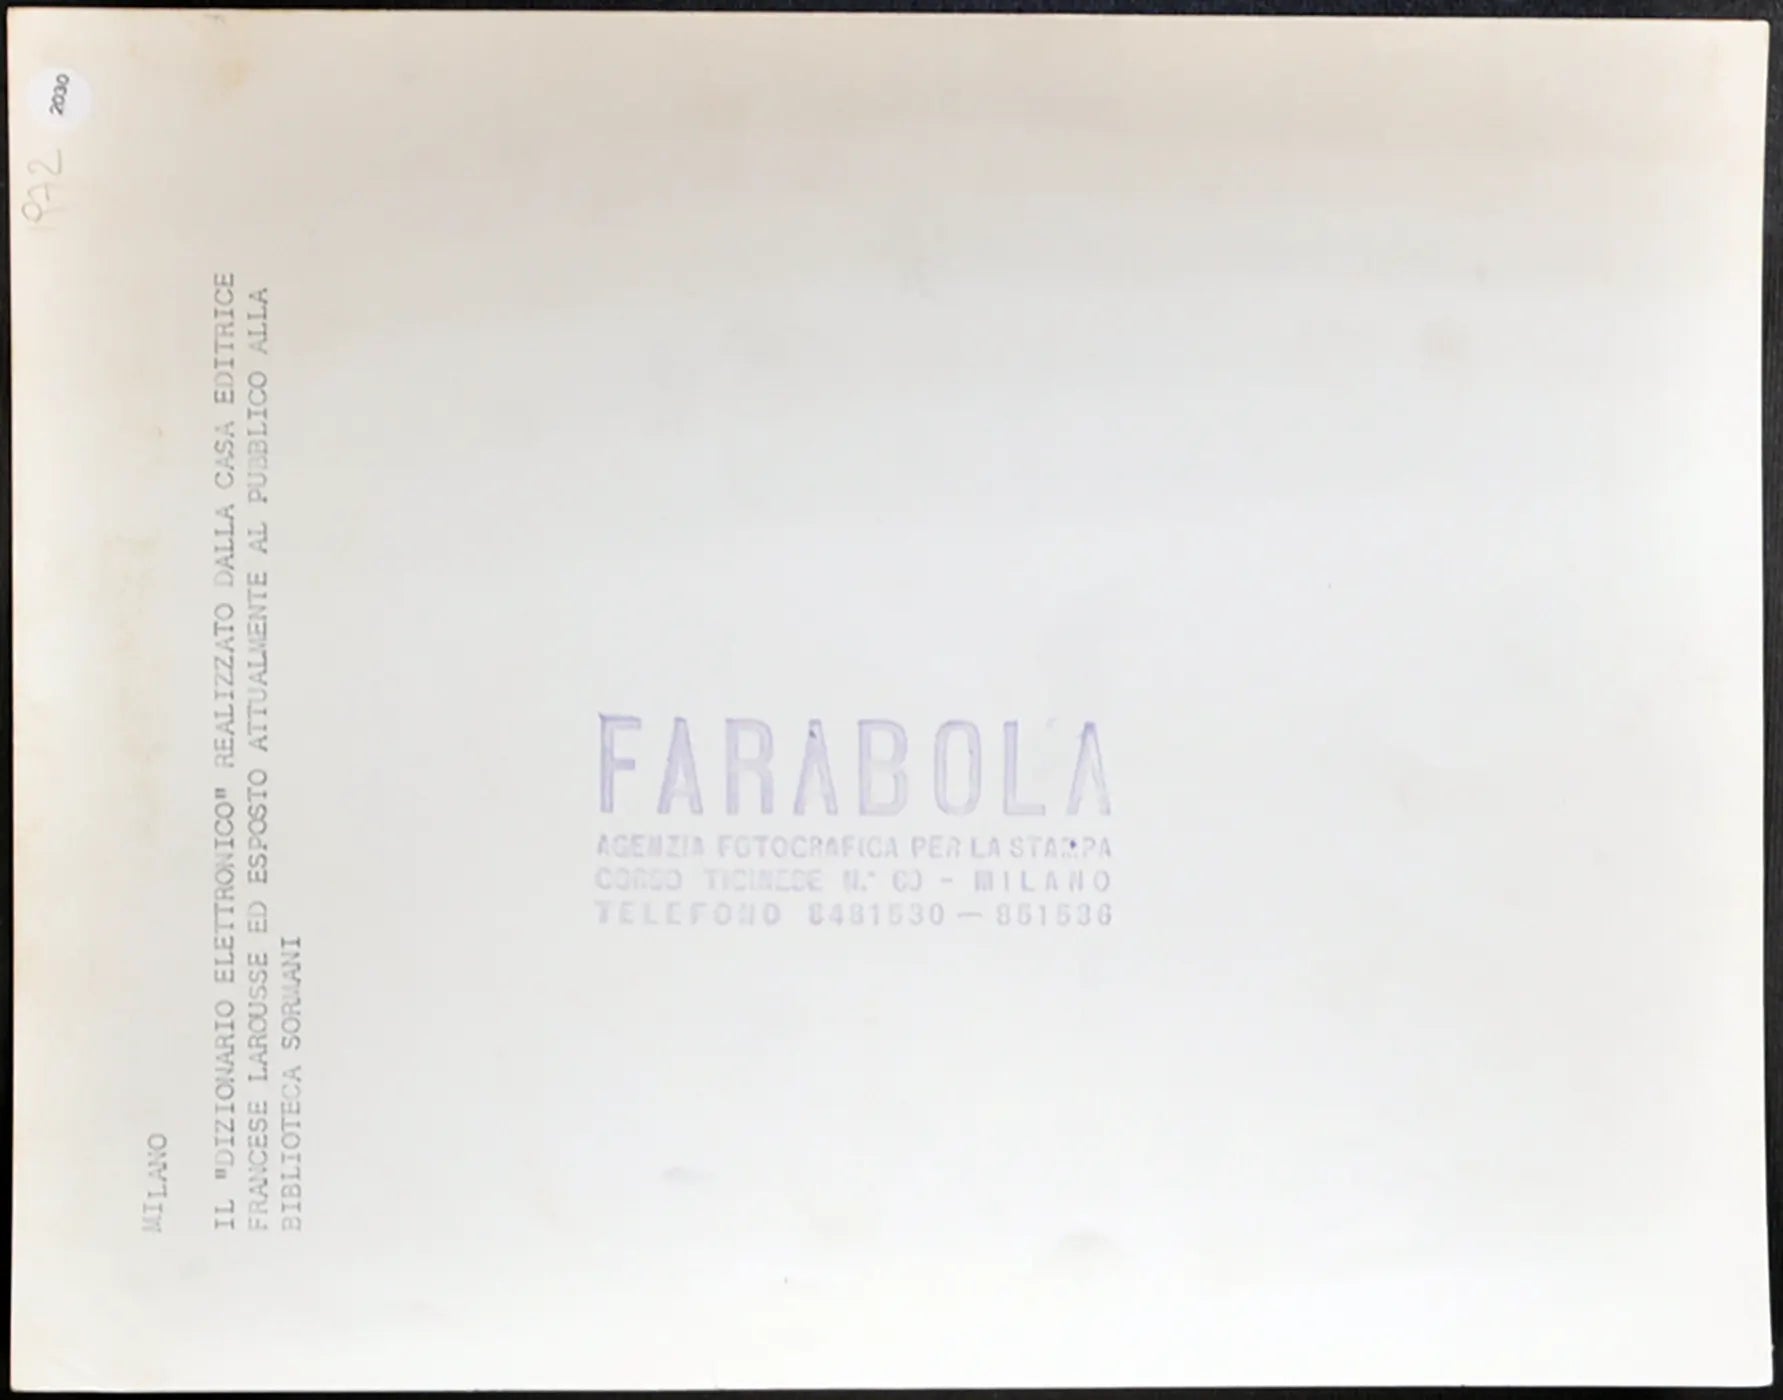 Dizionario Elettronico Larousse Ft 2030 - Stampa 21x27 cm - Farabola Stampa ai sali d'argento